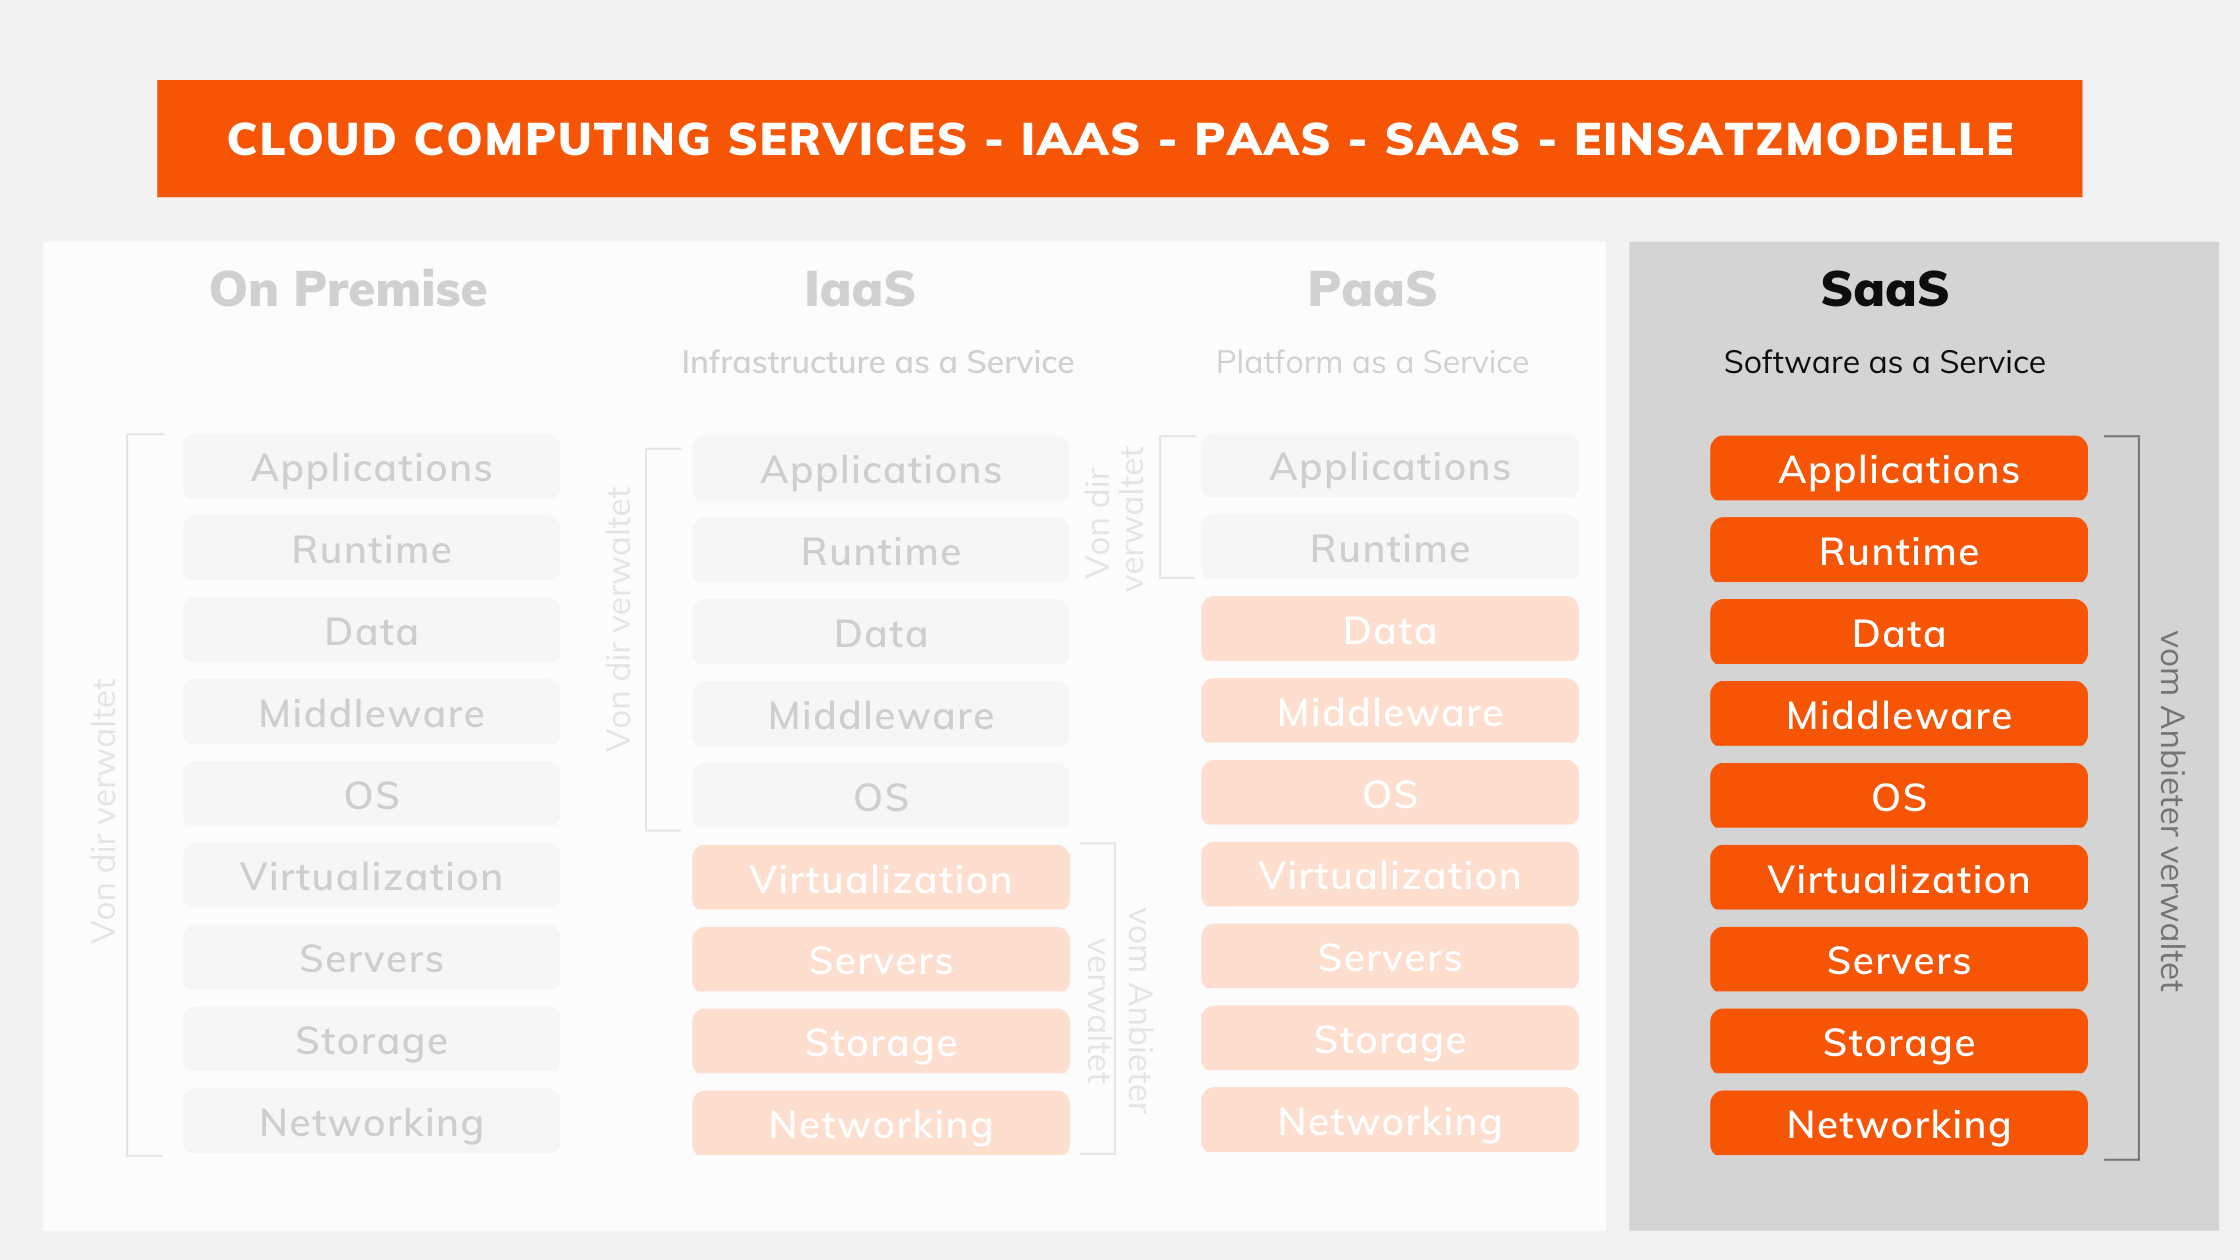 SaaS - Software as a Service - Cloud Computing